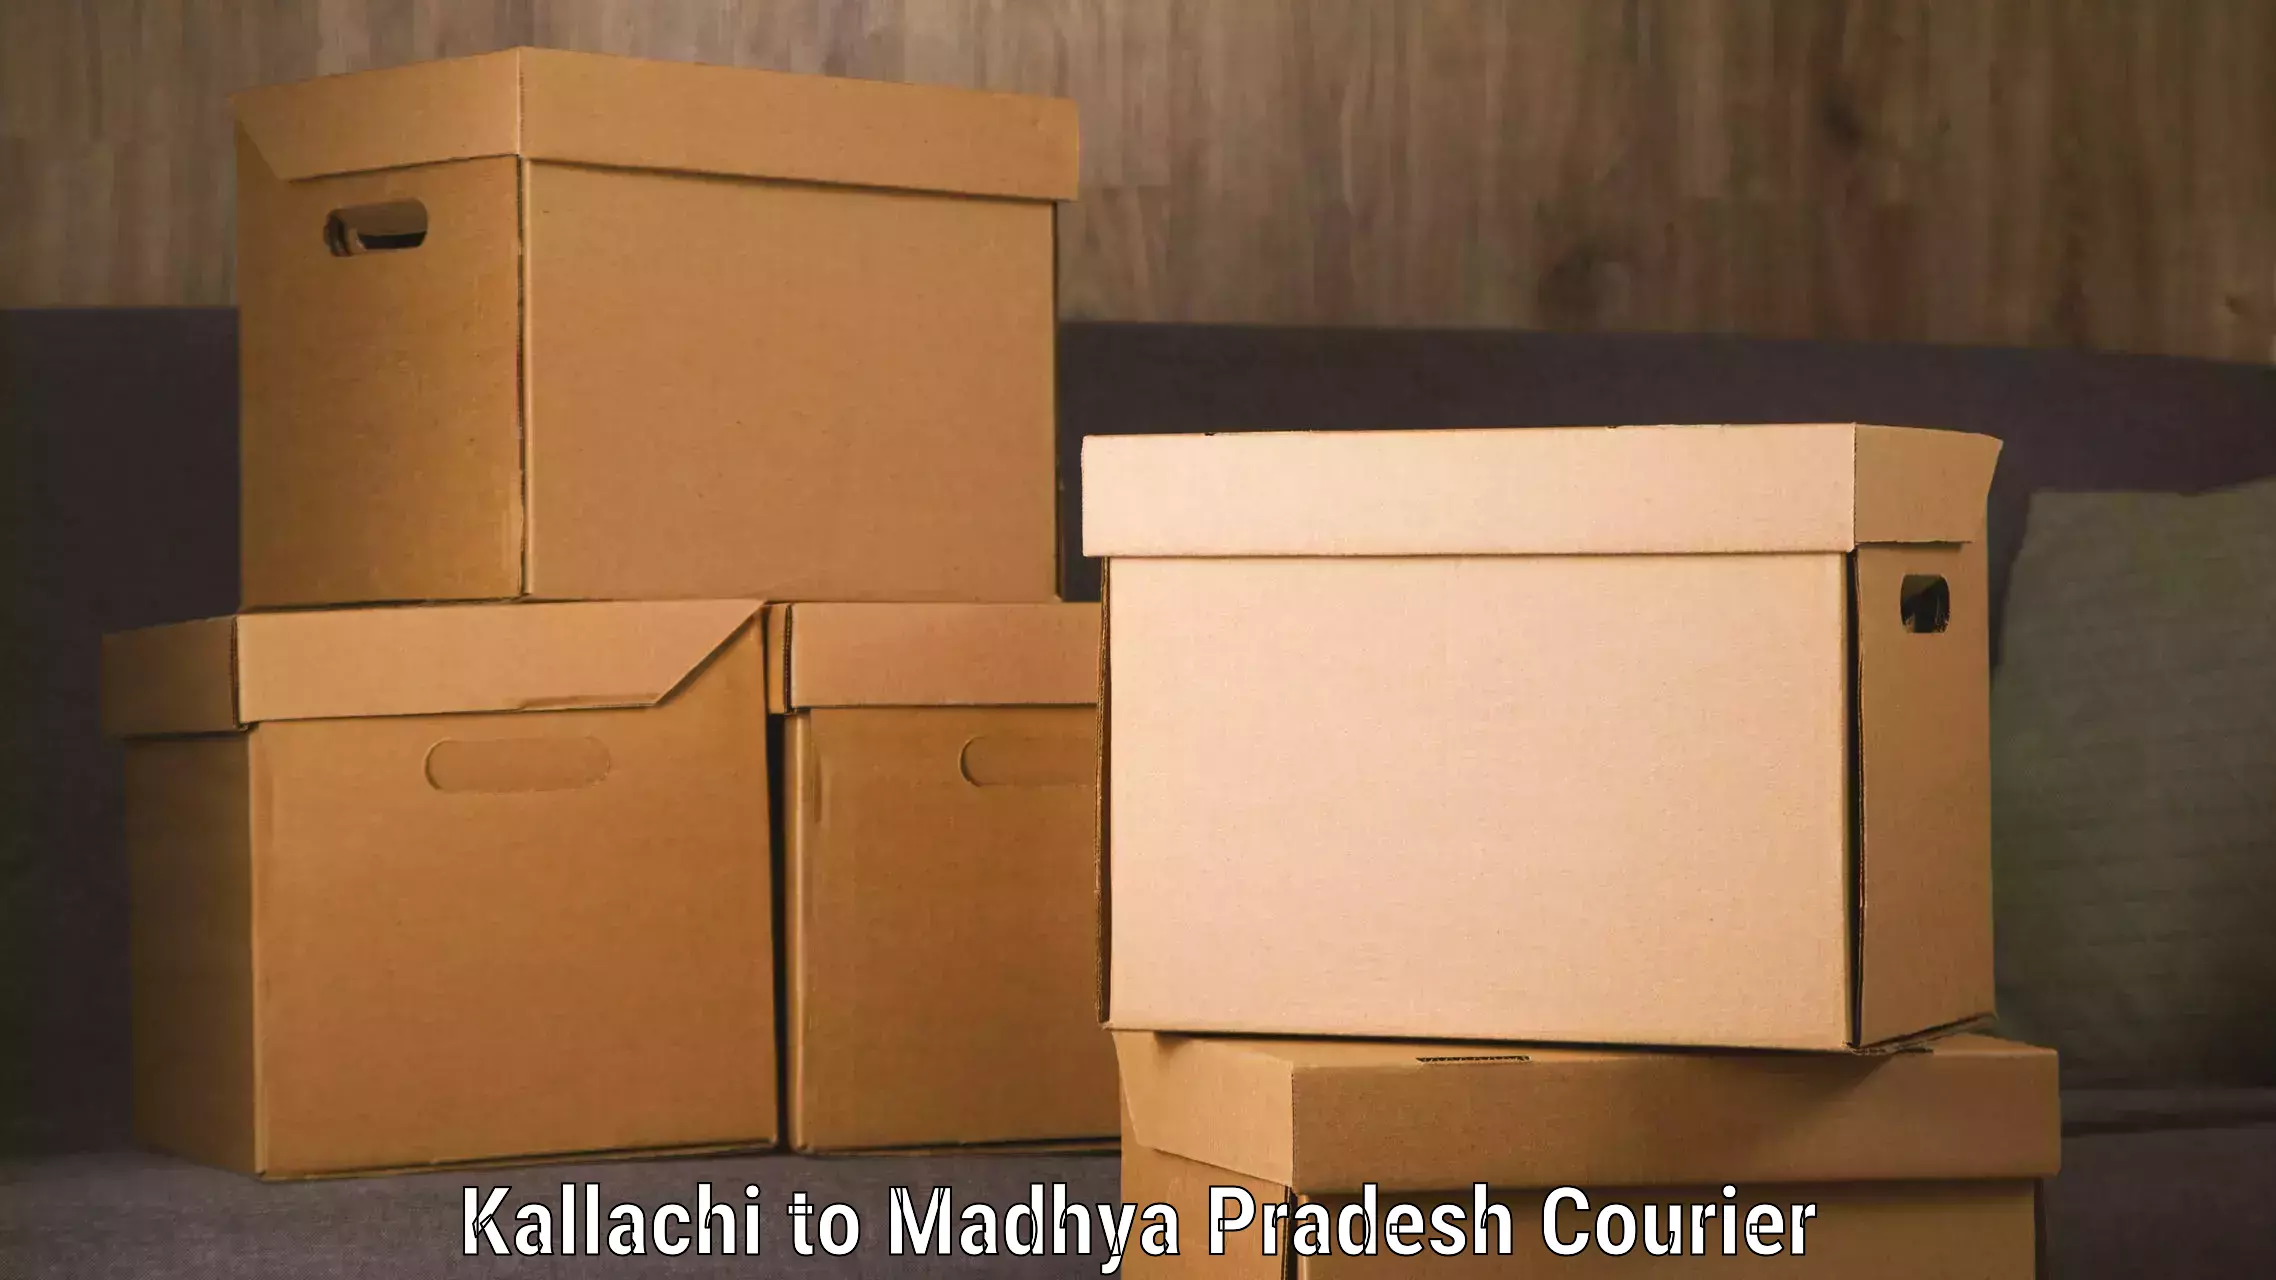 Digital courier platforms Kallachi to Khandwa